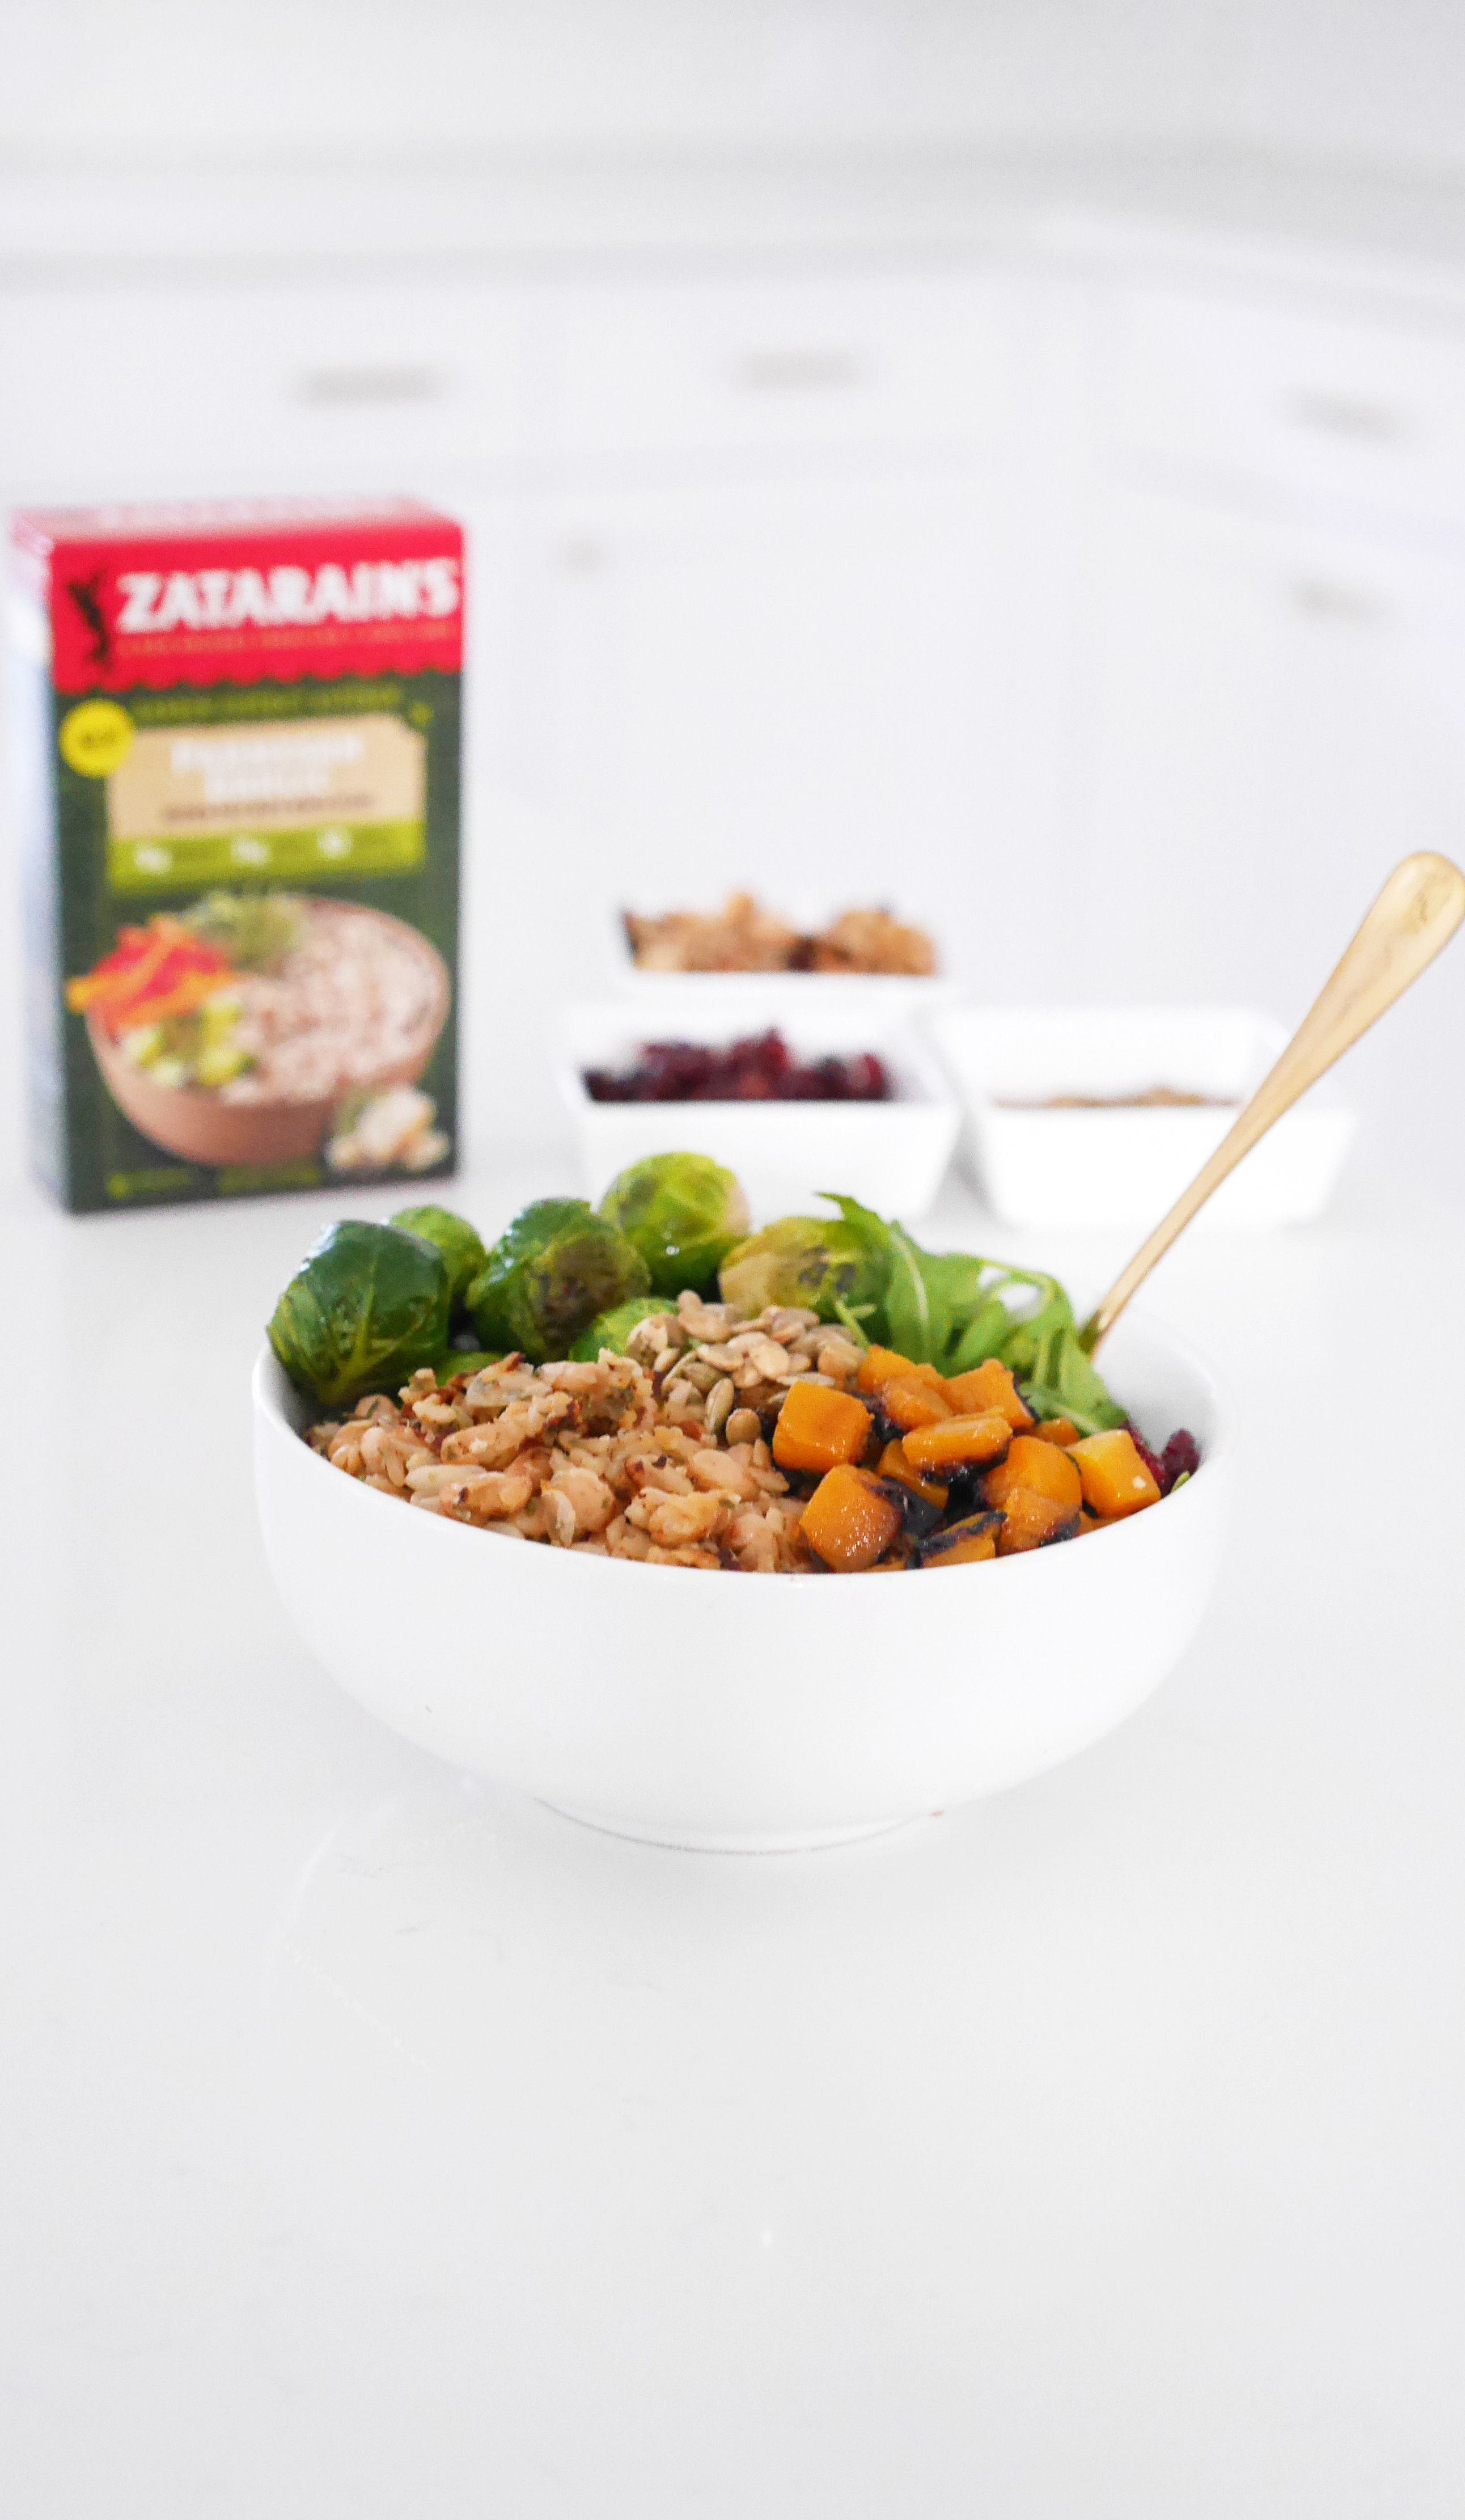 Zatarain’s Parmesan Garlic Brown Rice with White Beans